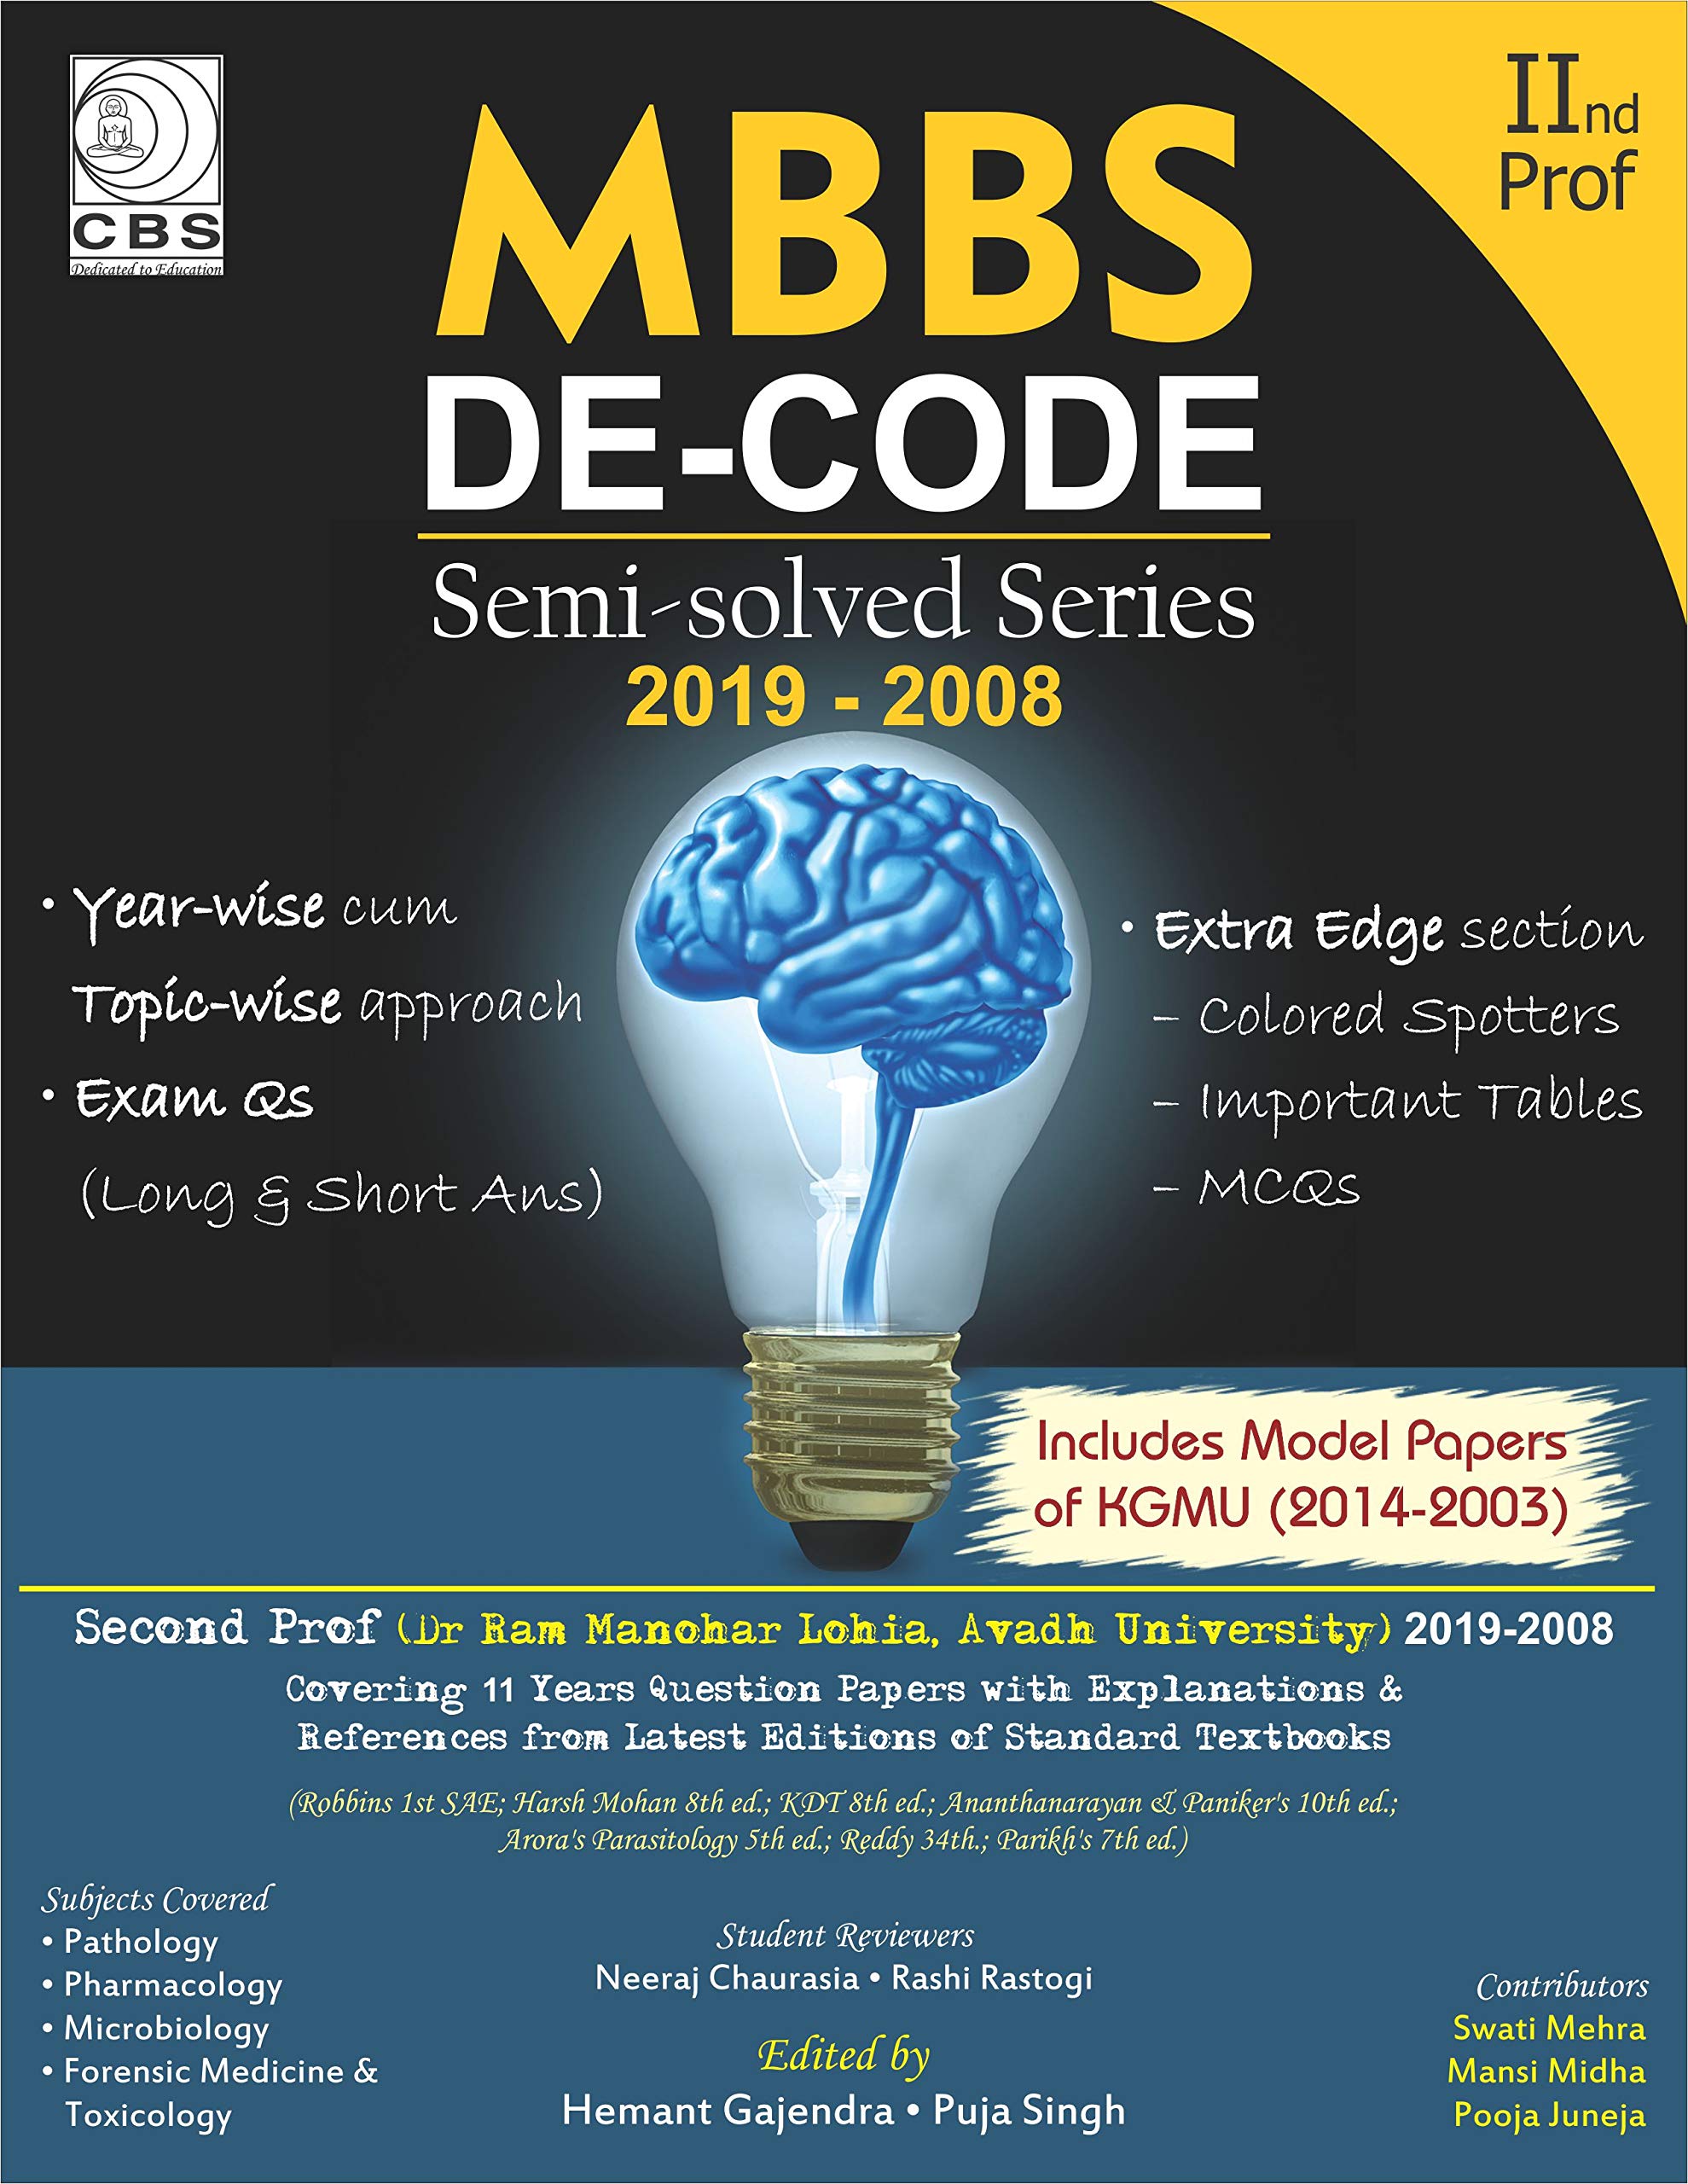 Mbbs De-Code Semi-Solved Series 2019-2008, Iind Prof (Pb), Avadh University